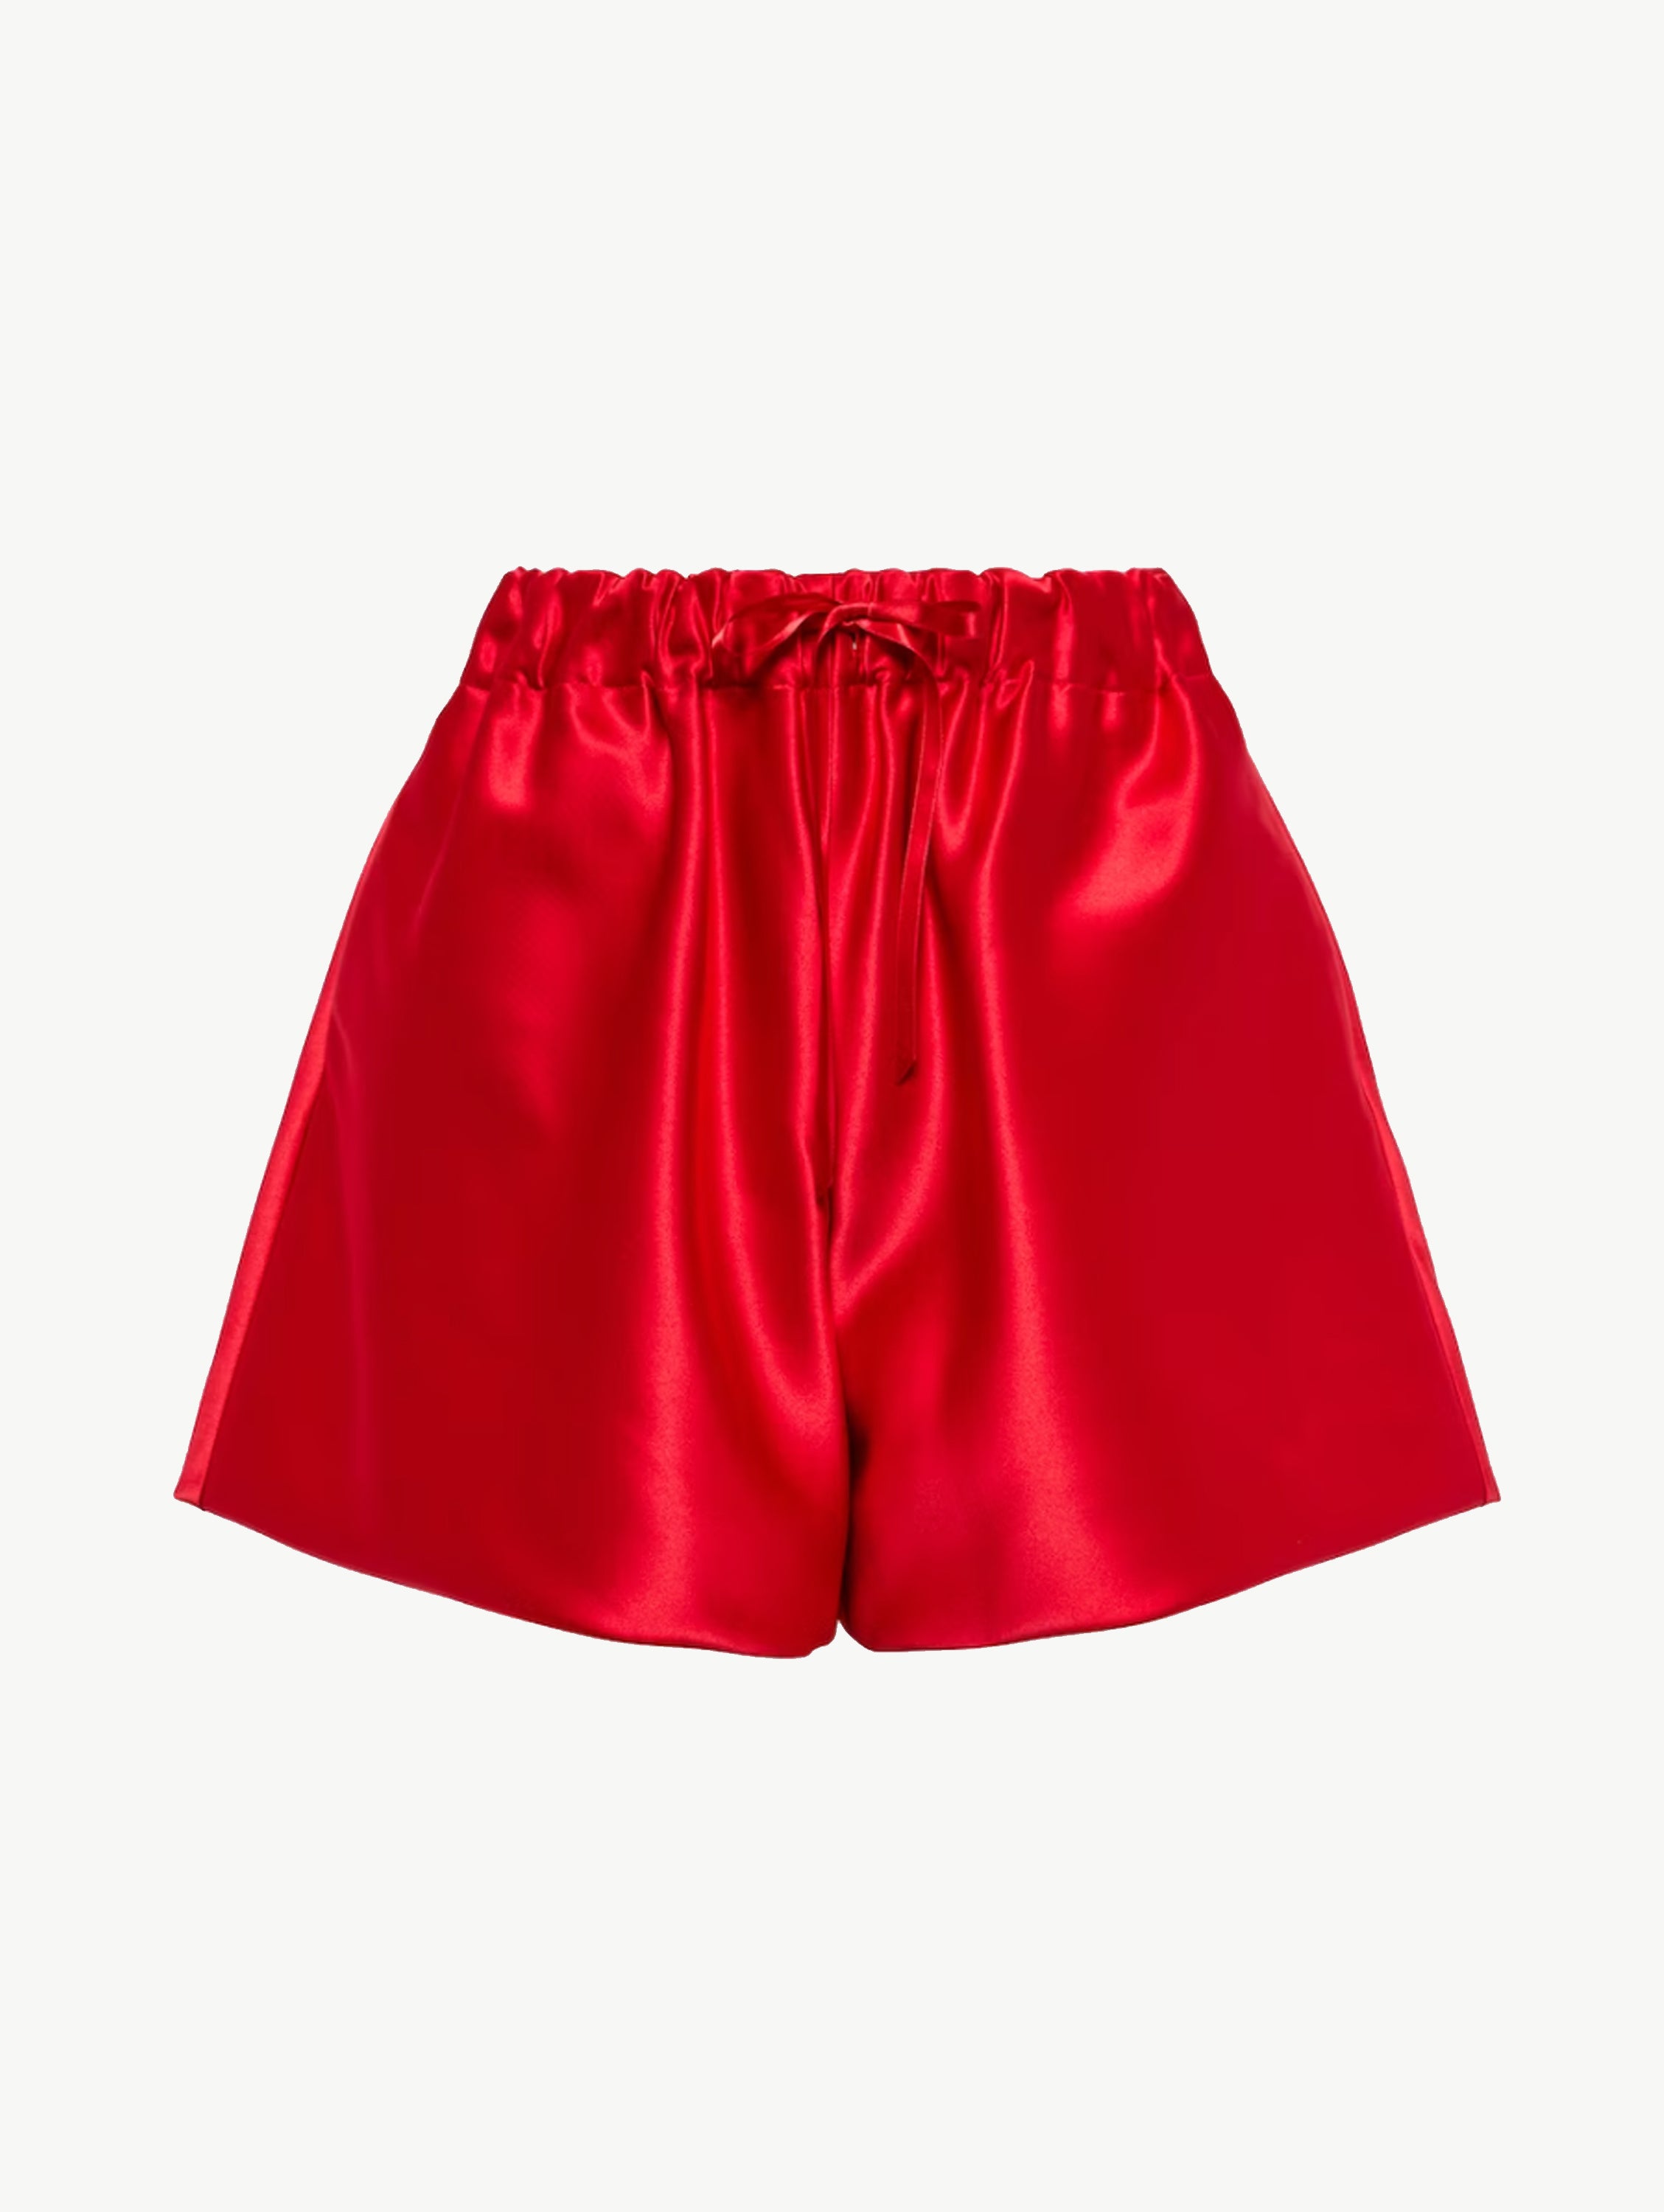 Red satin shorts